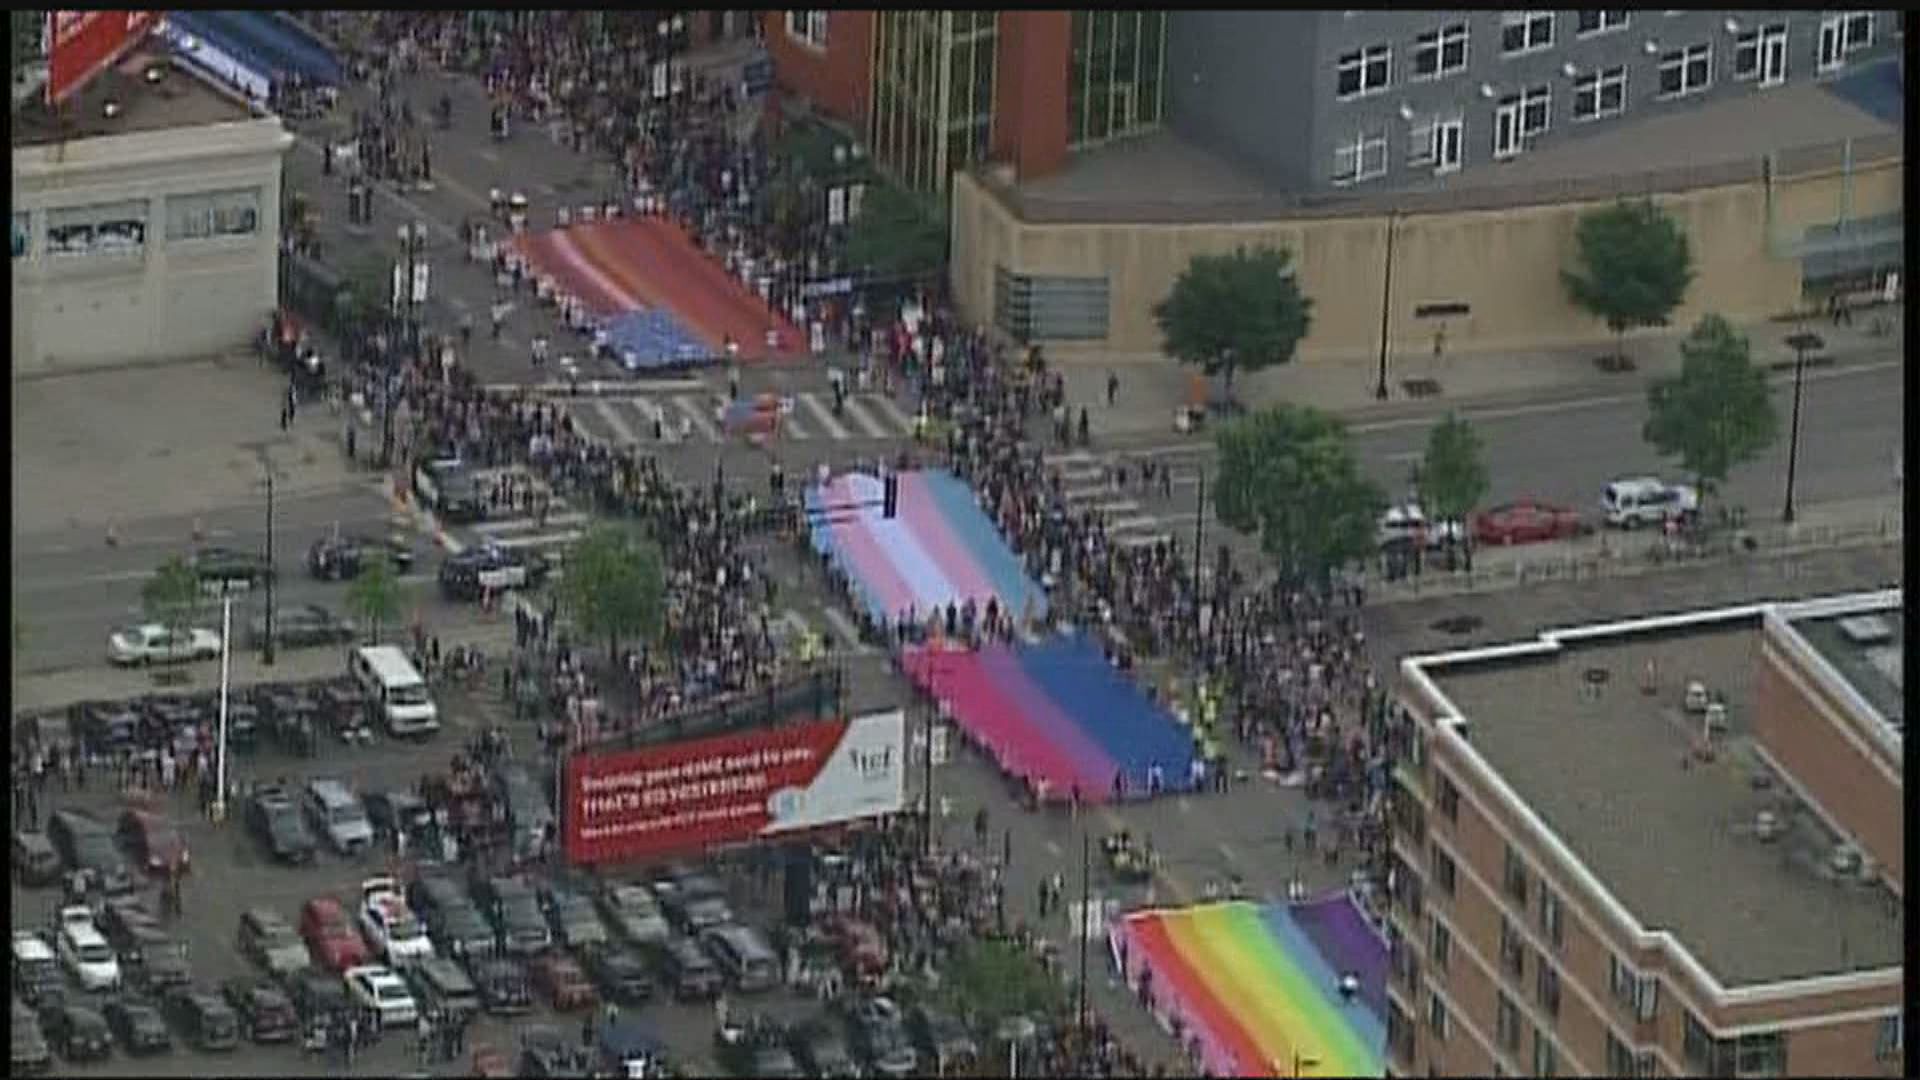 kare11.com | Pride Parade draws more than 150K in Minneapolis1920 x 1080